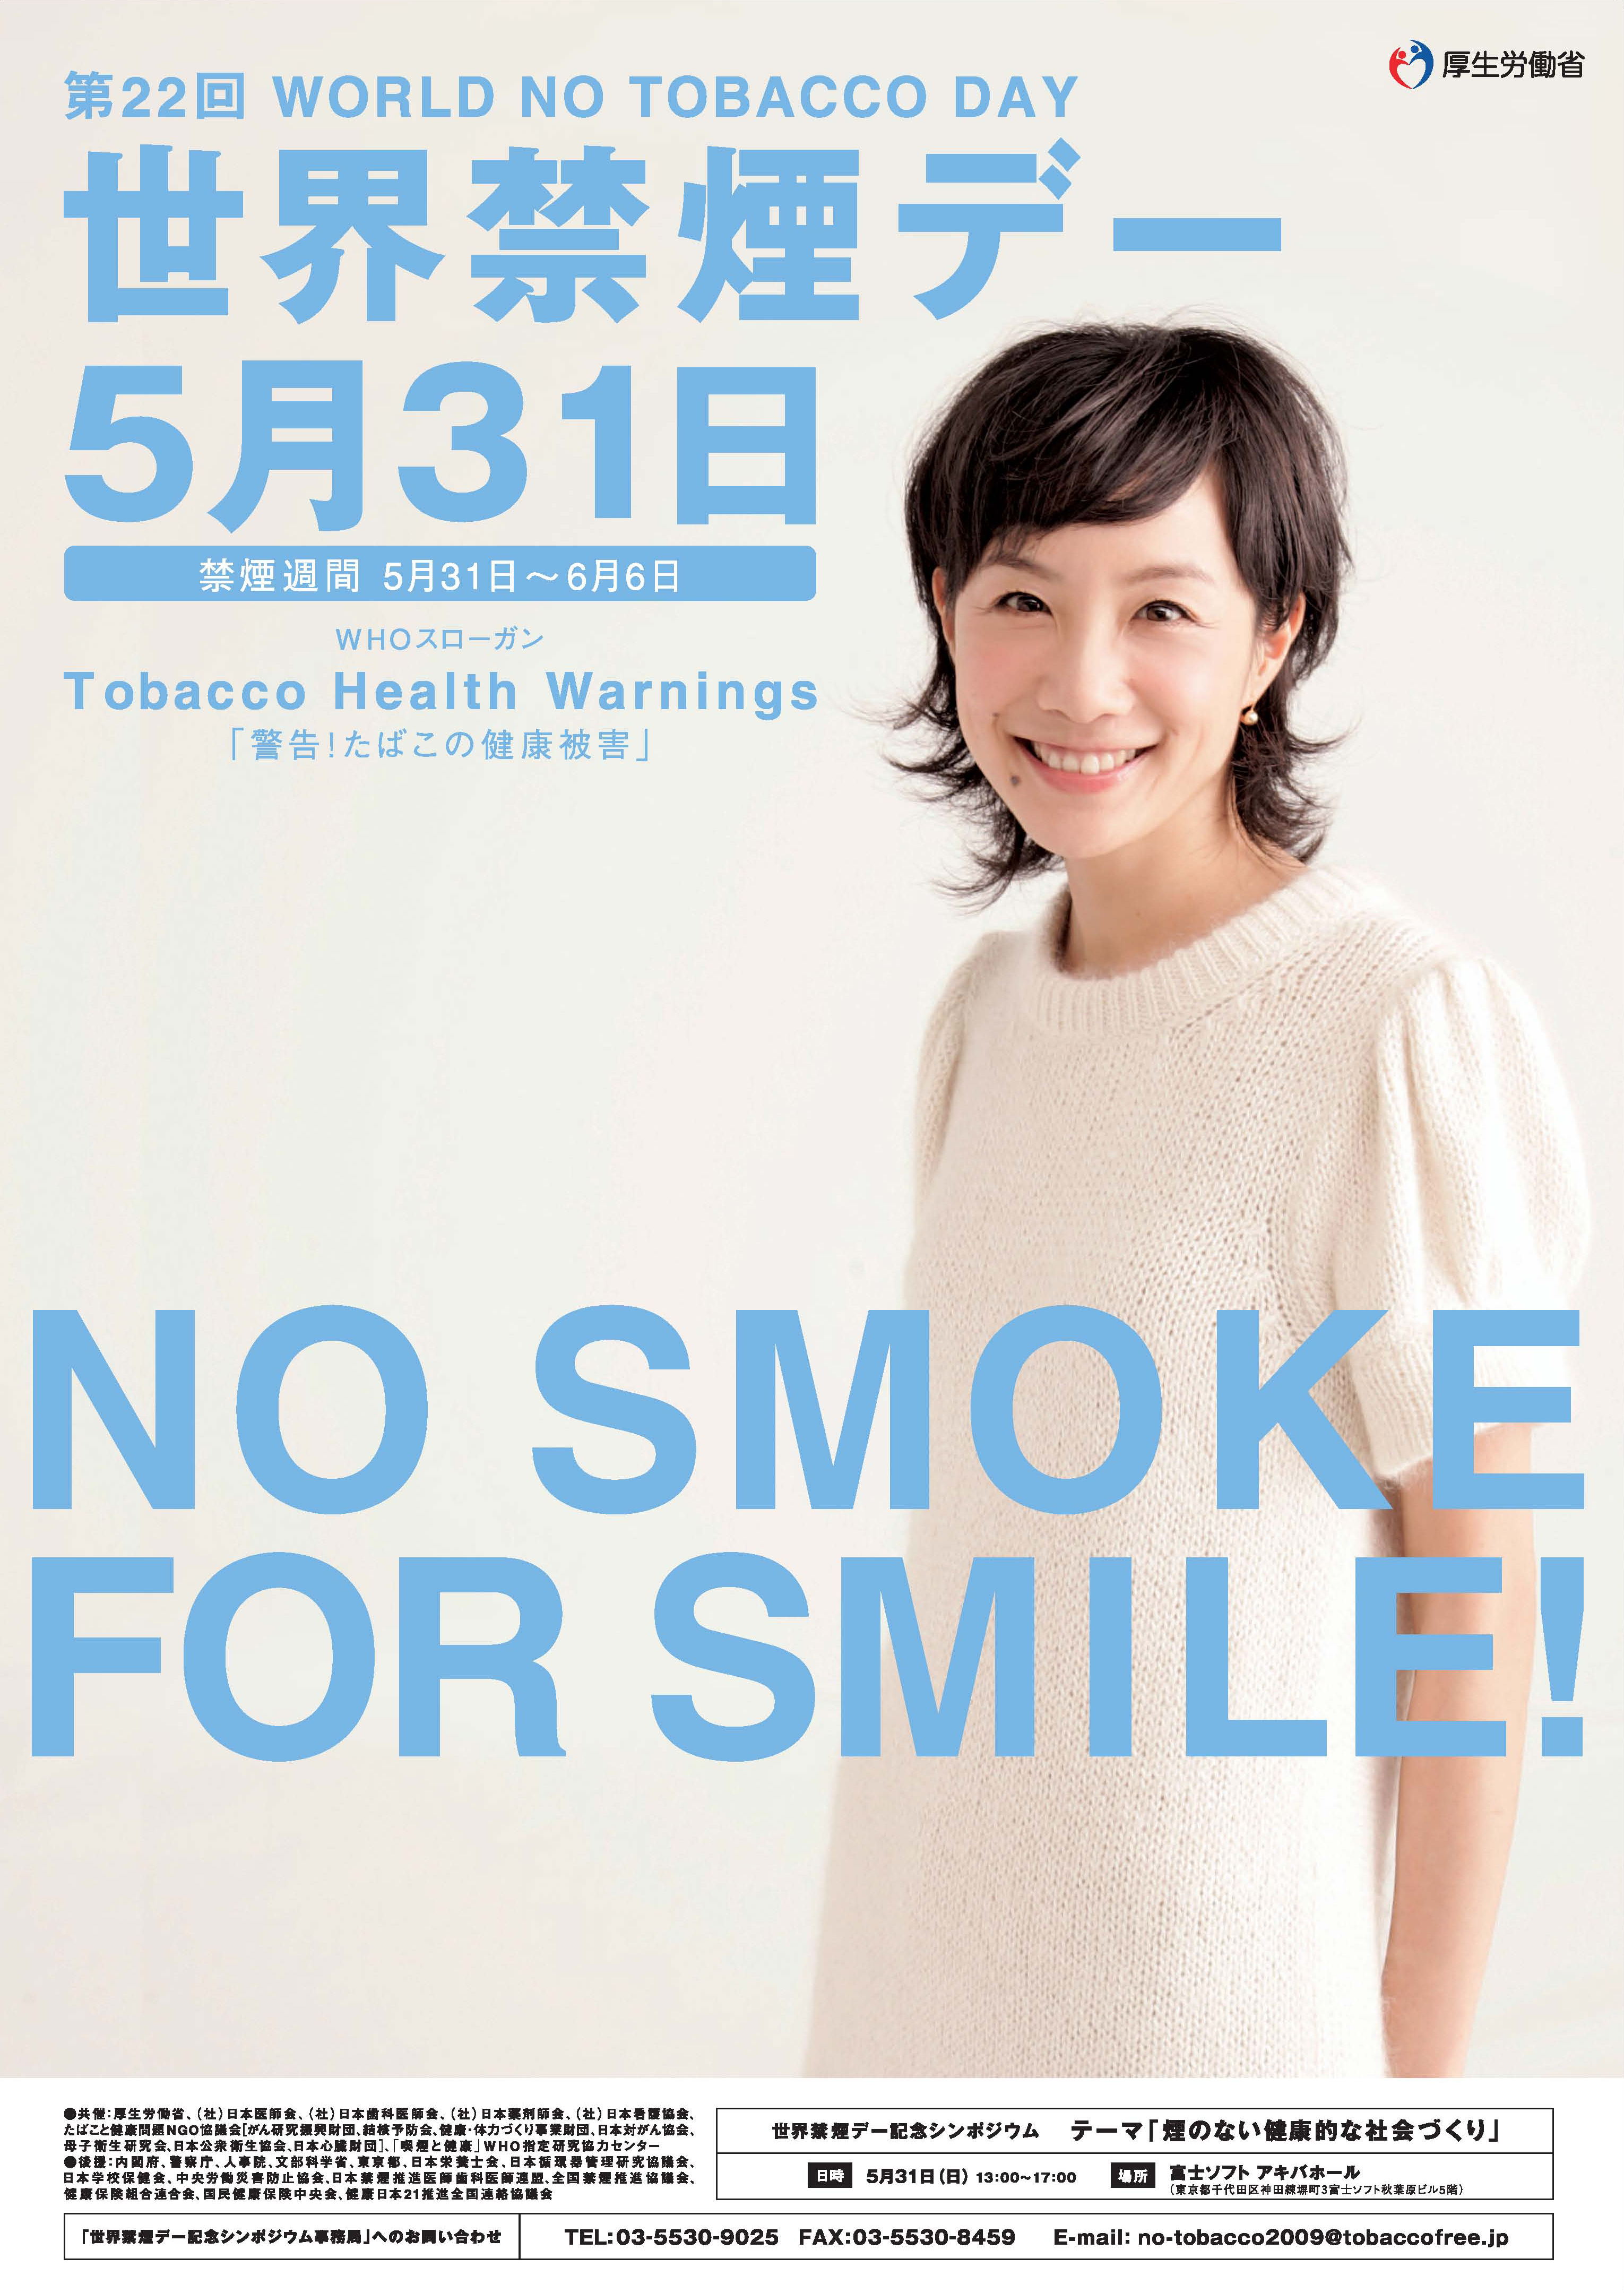 NO SMOKE FOR SMILE!